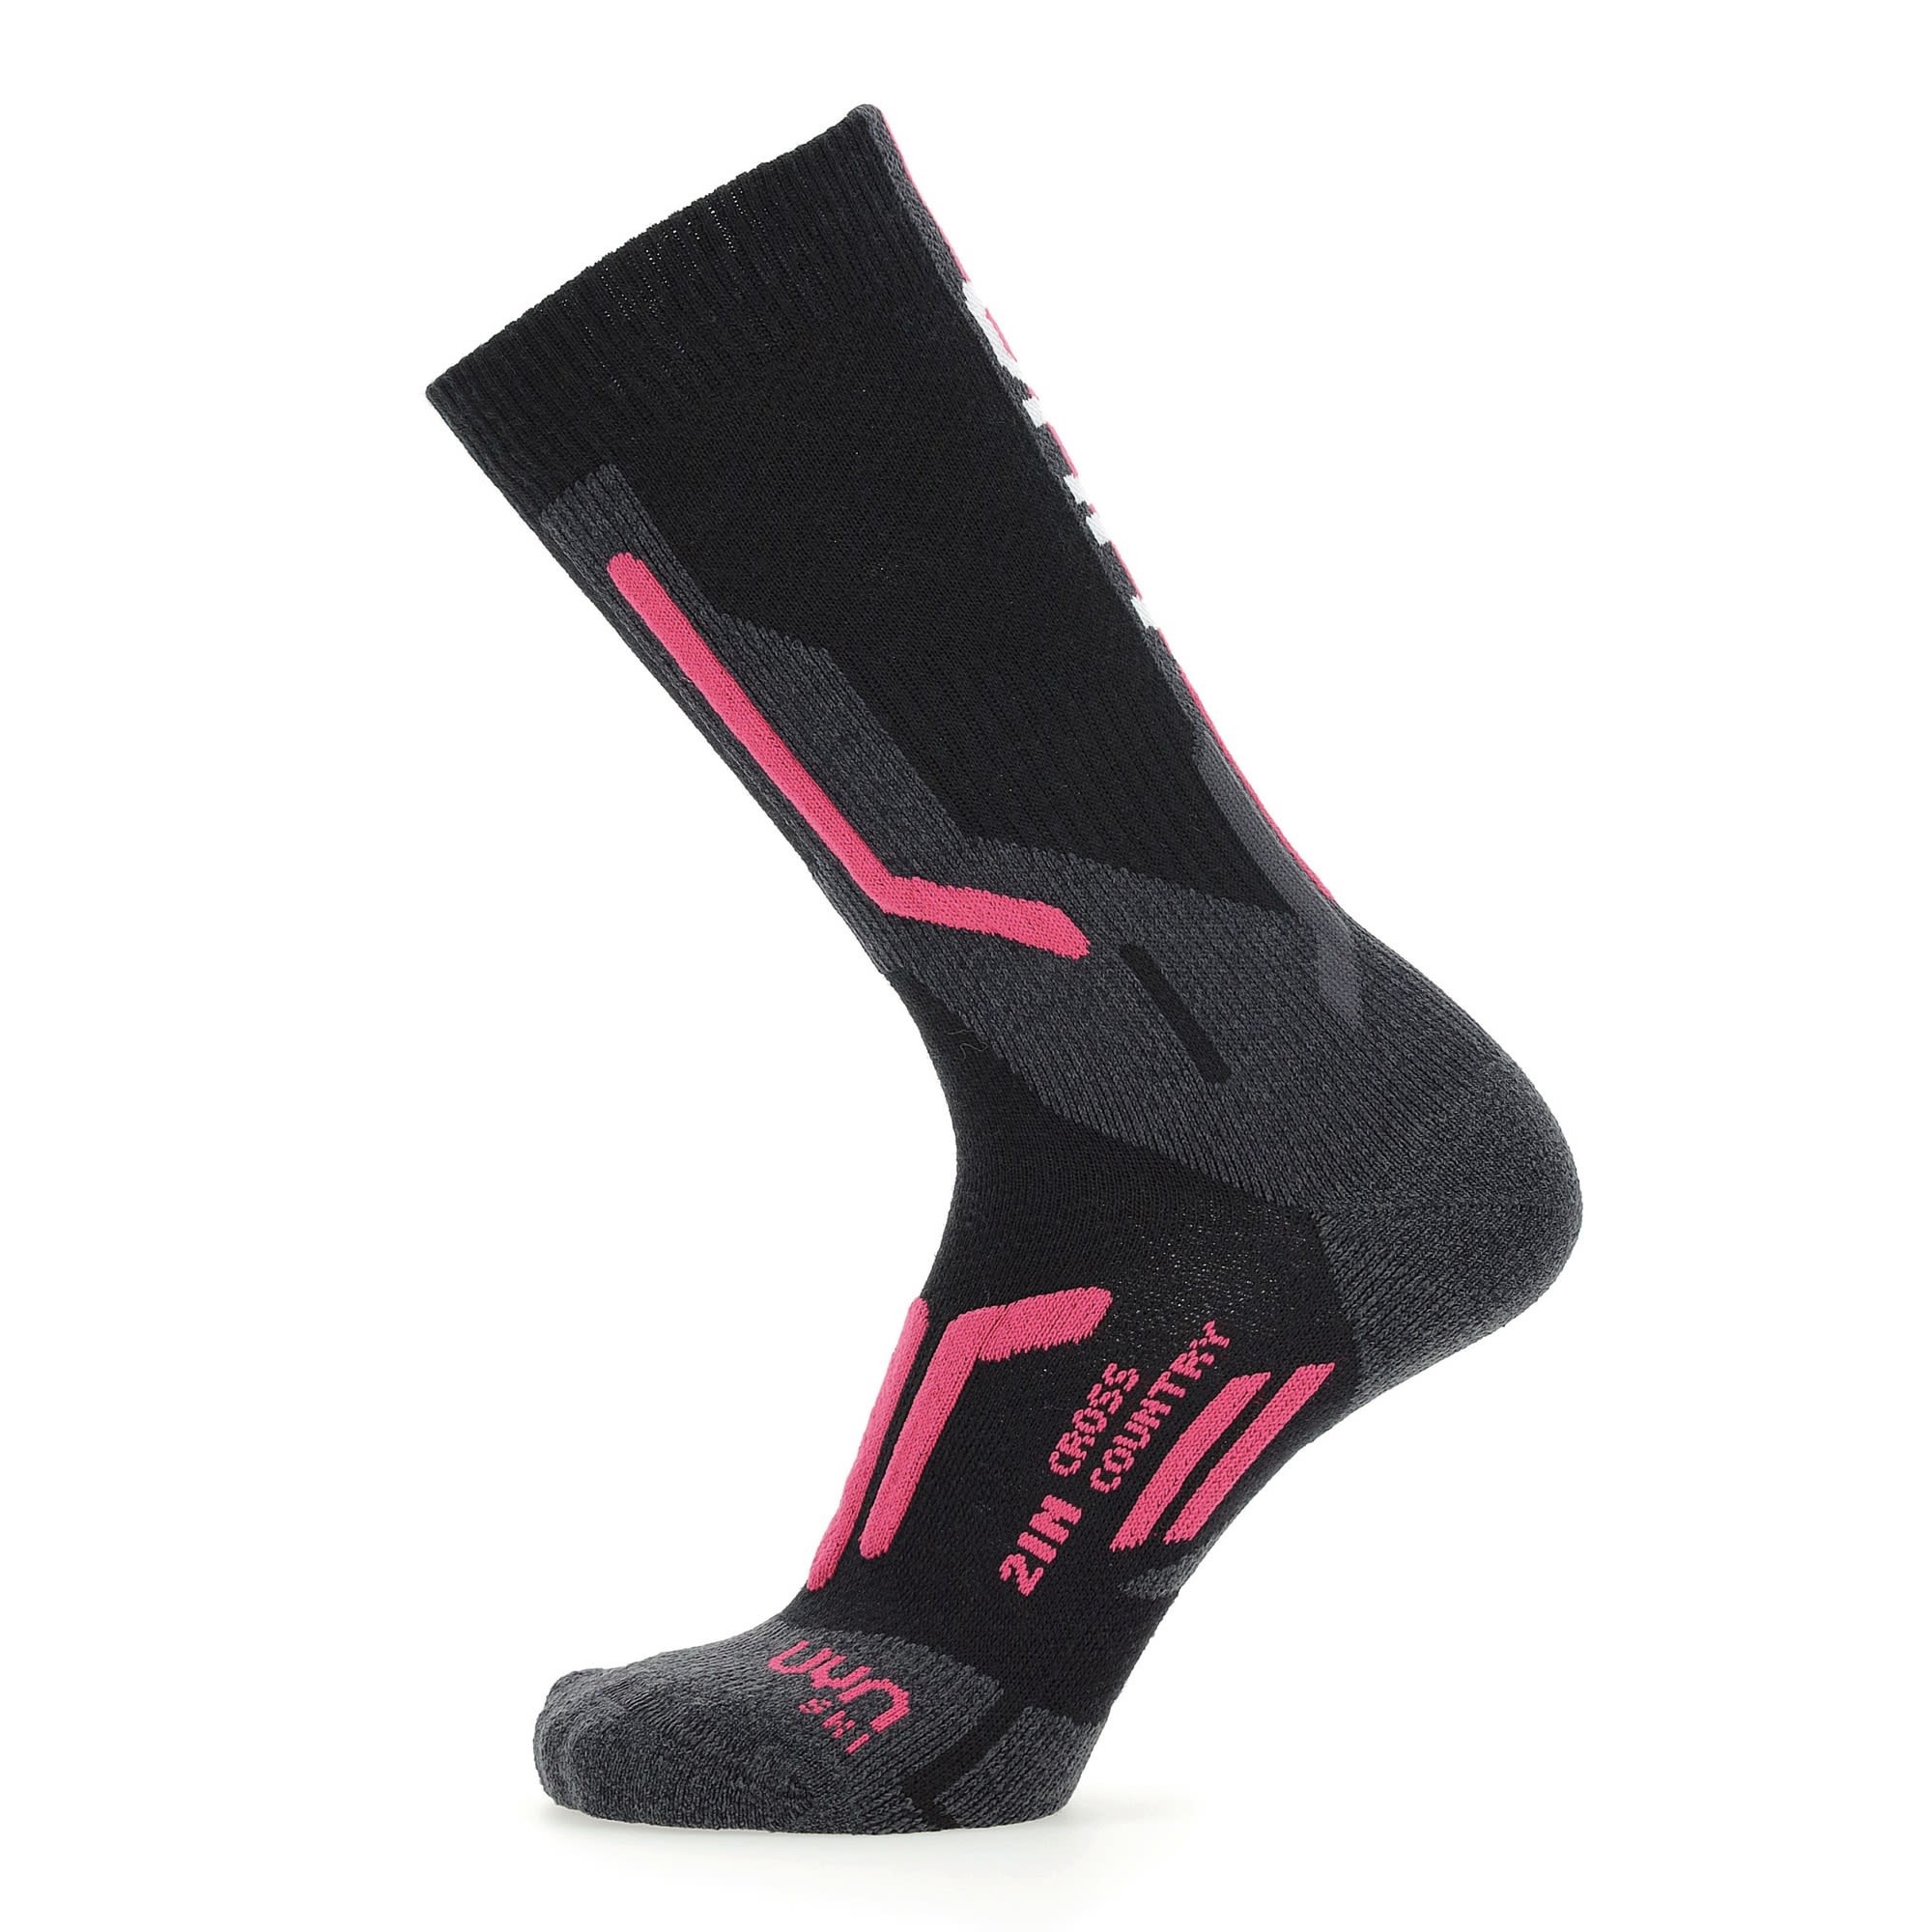 Uyn Wärmeregulierende schnelltrocknende Damen Langlaufsocken Black - Pink